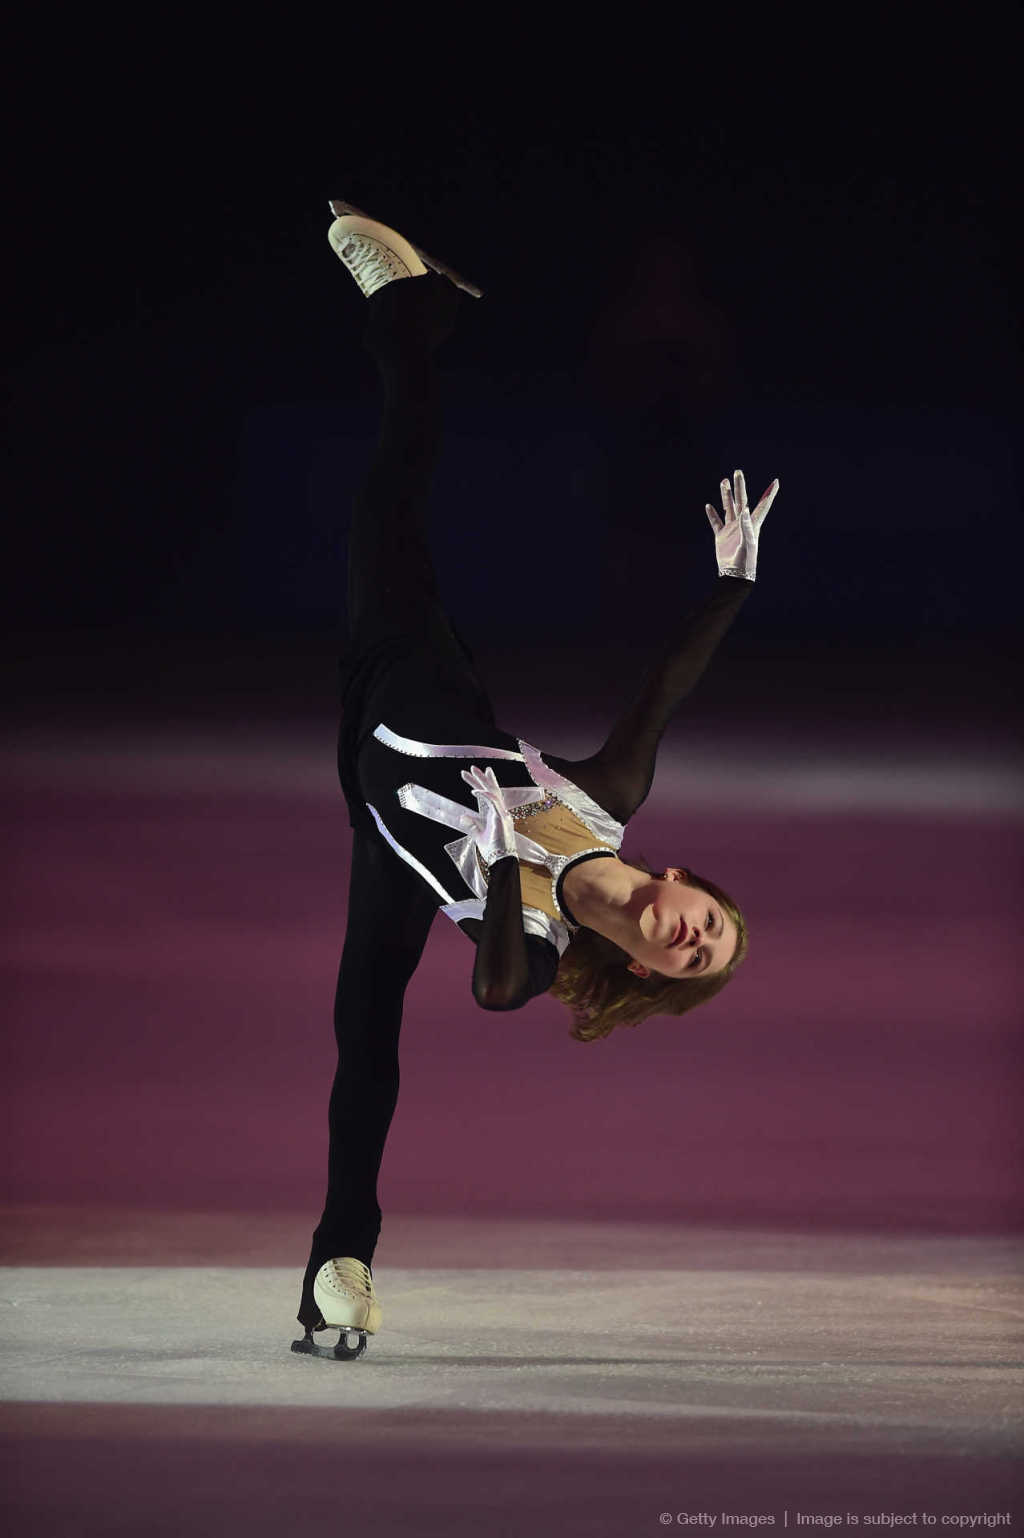 Trophee Eric Bompard ISU Grand Prix of Figure Skating — Day Three